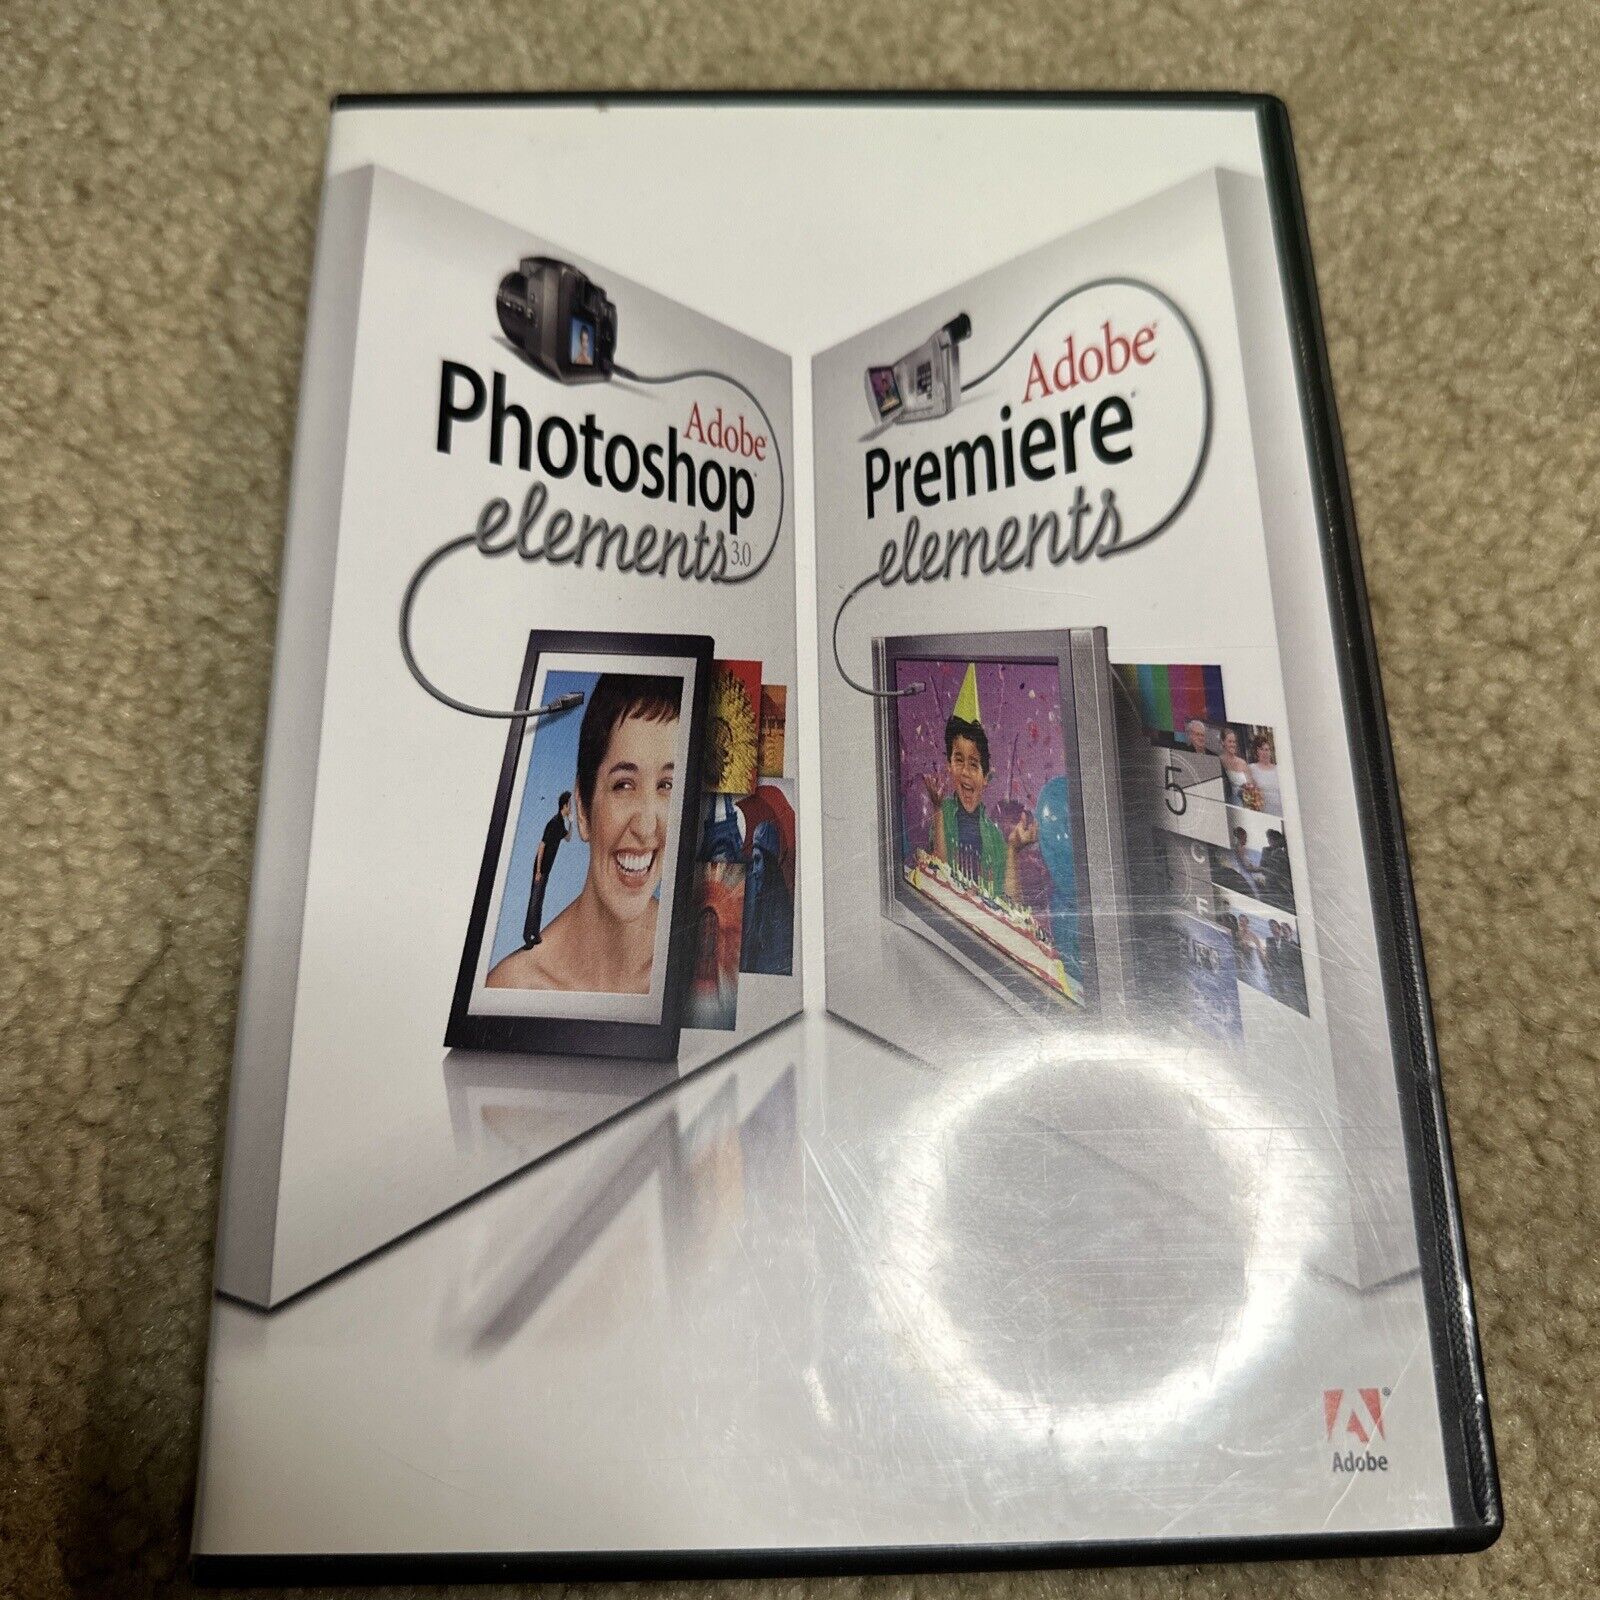 Adobe Photoshop Elements 3.0 PLUS Adobe Premiere Elements, for XP -